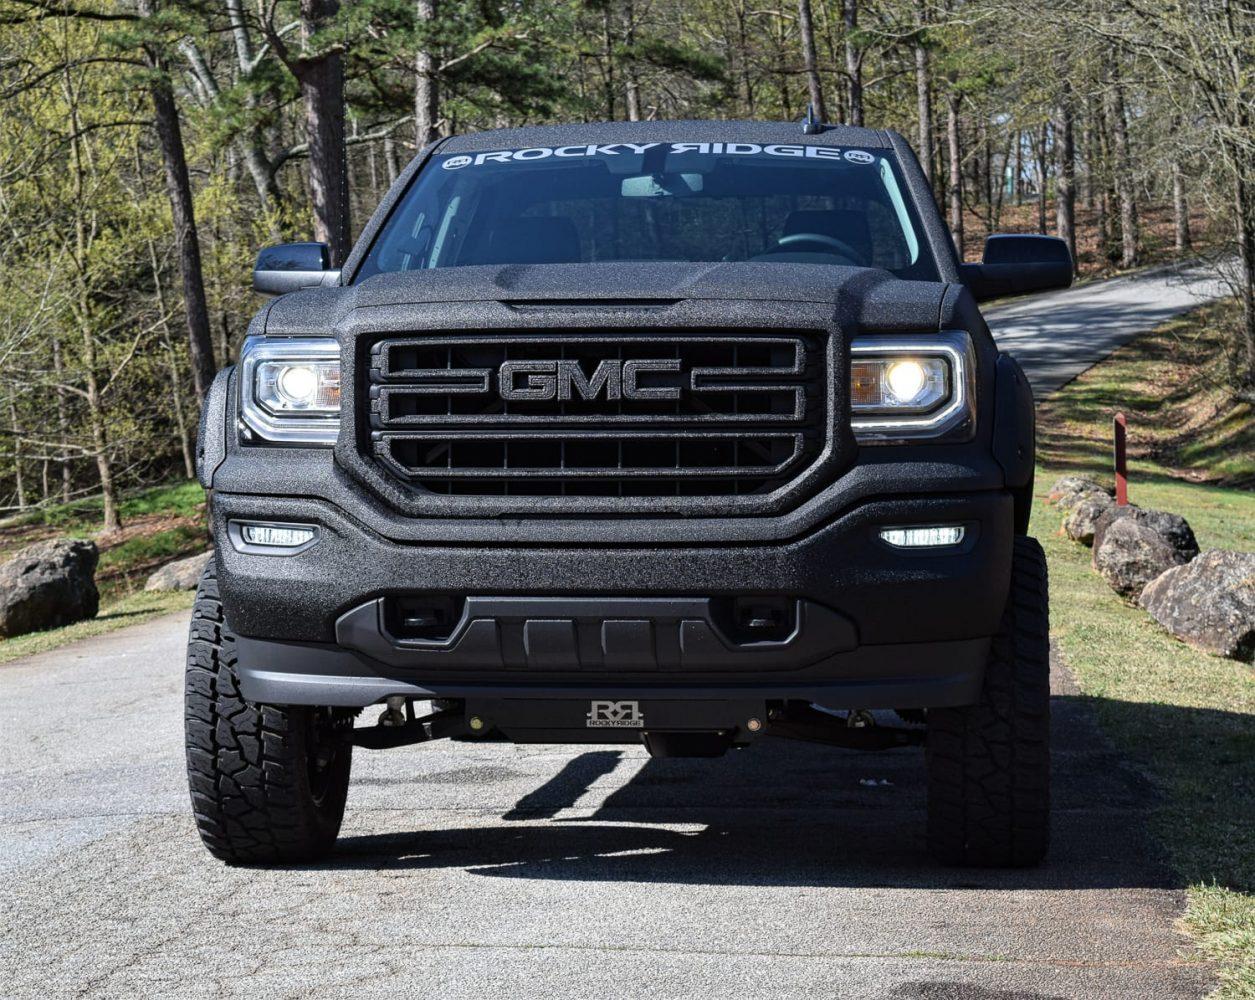 Black Grill for GMC Logo - GMC Sierra Z71 Stealth XL Lifted Truck. Rocky Ridge Trucks